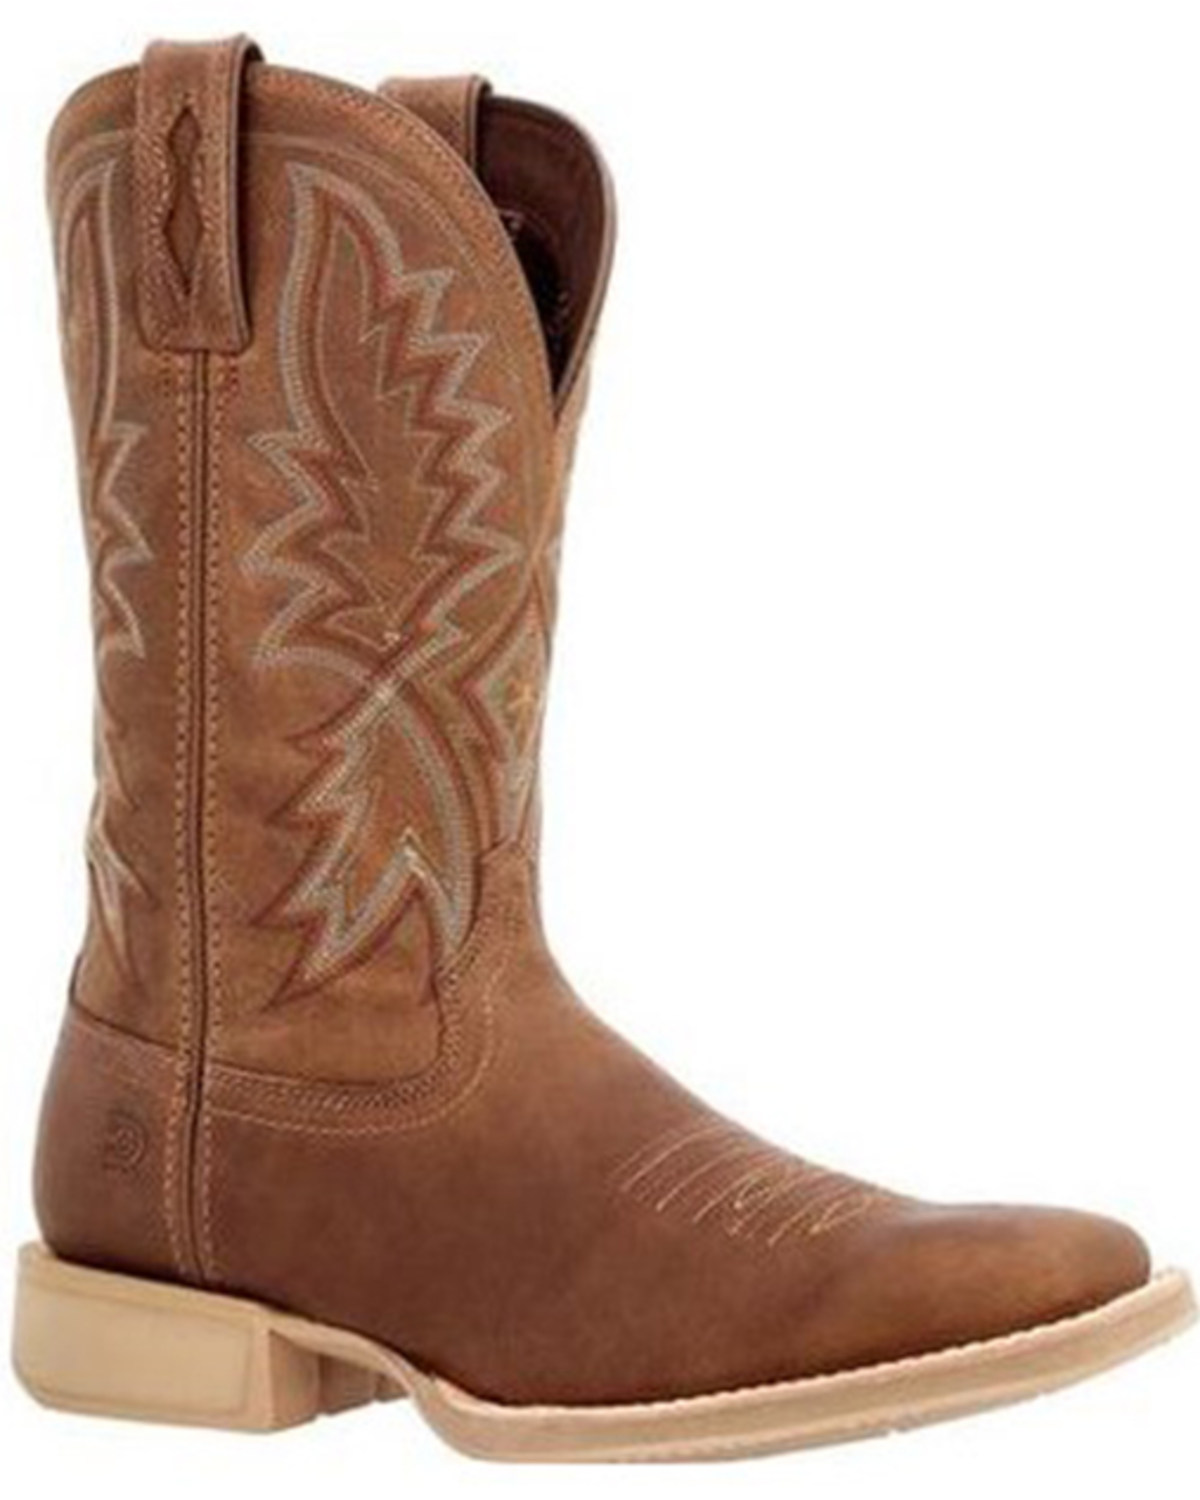 Durango Men's Coyote Rebel Pro Lite Western Boots - Broad Square Toe